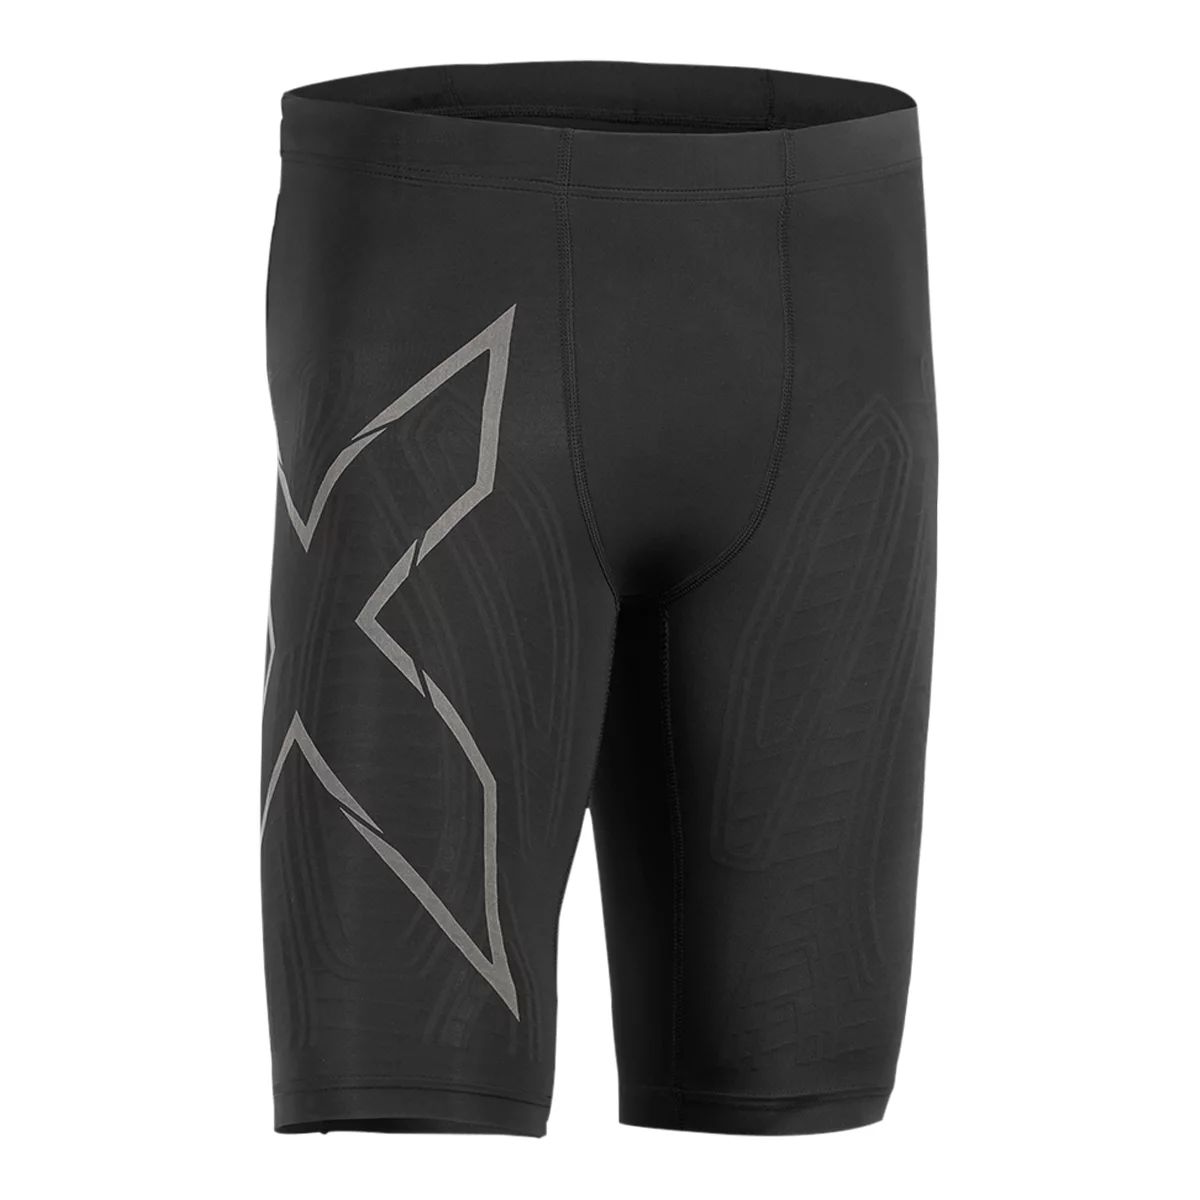 Men's 2XU Core Compression Shorts :Black